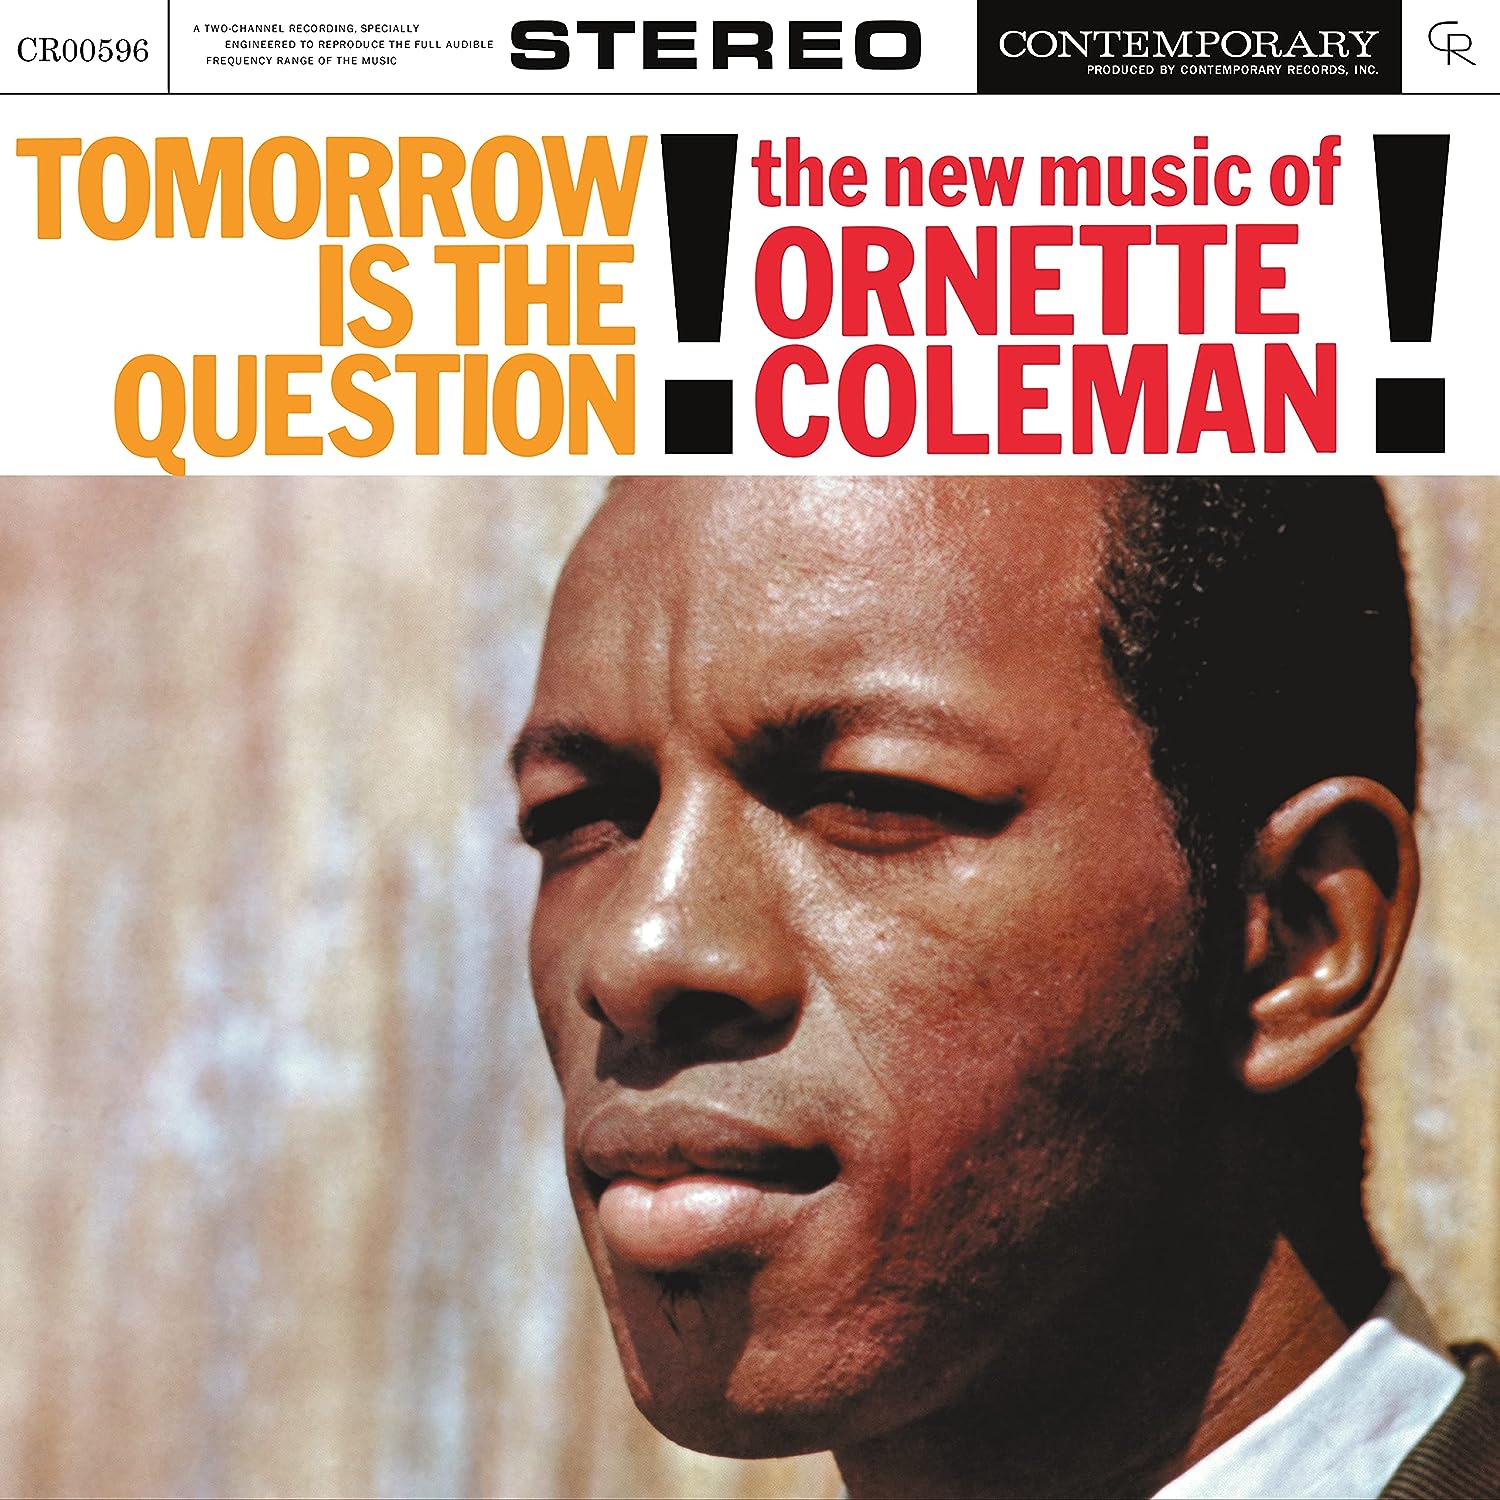 Джаз Universal (Aus) Ornette Coleman - Tomorrow Is The Question (Acoustic Sounds) (Black Vinyl LP) литературный призрак митчелл д